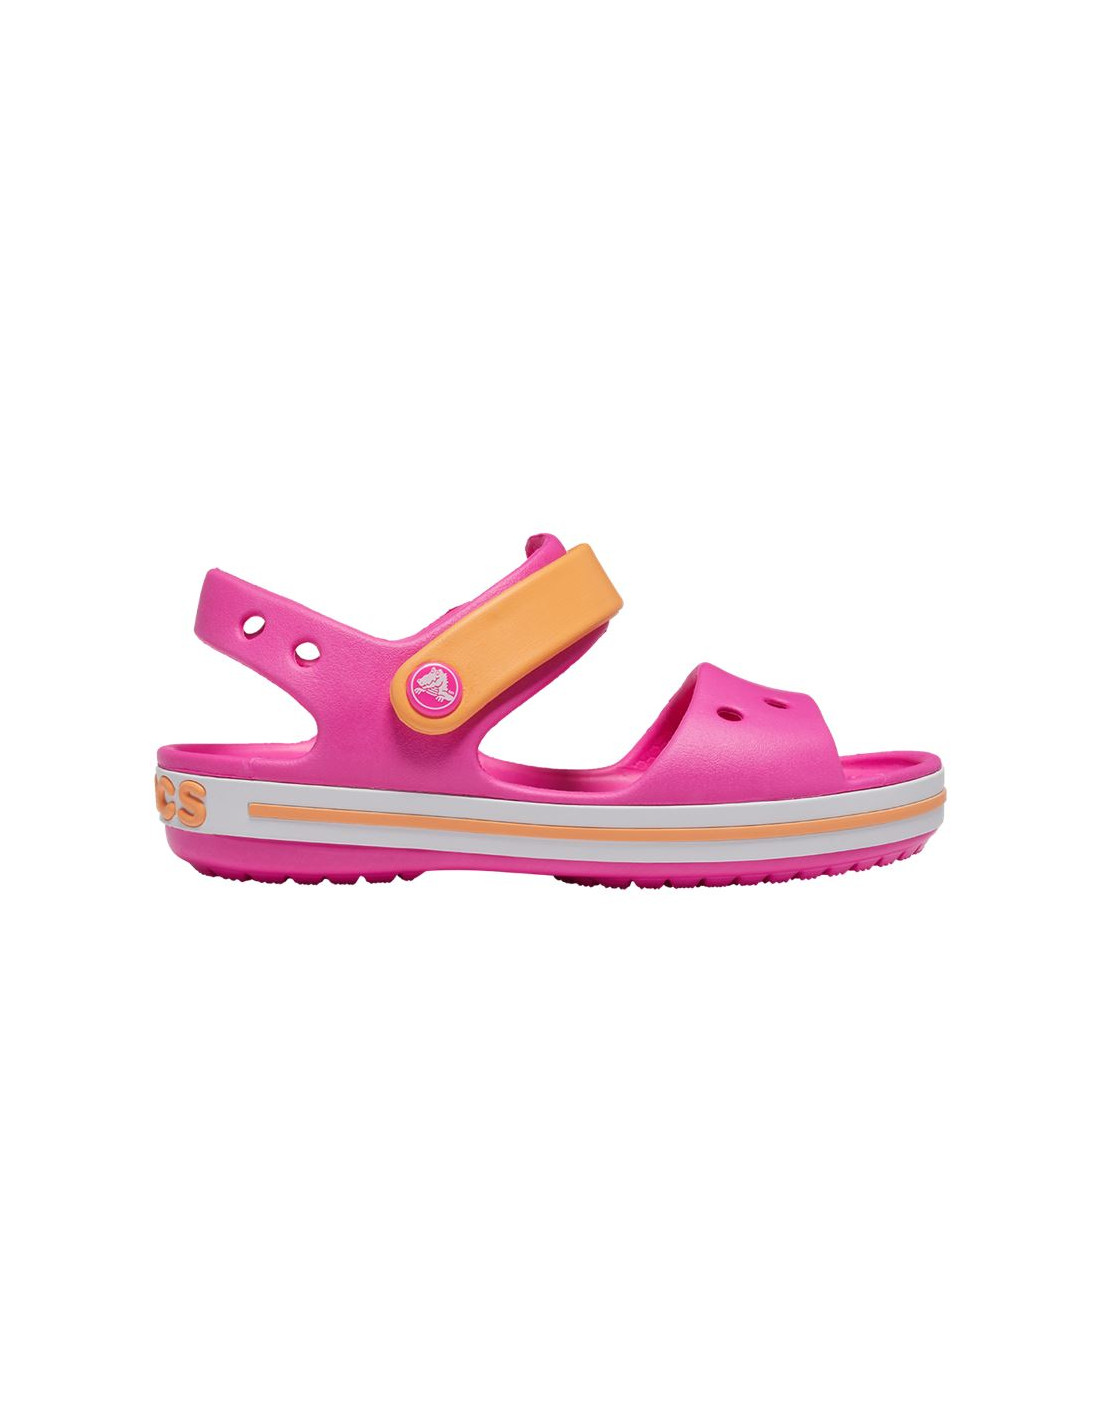 Sandalias crocs crocband kids pink